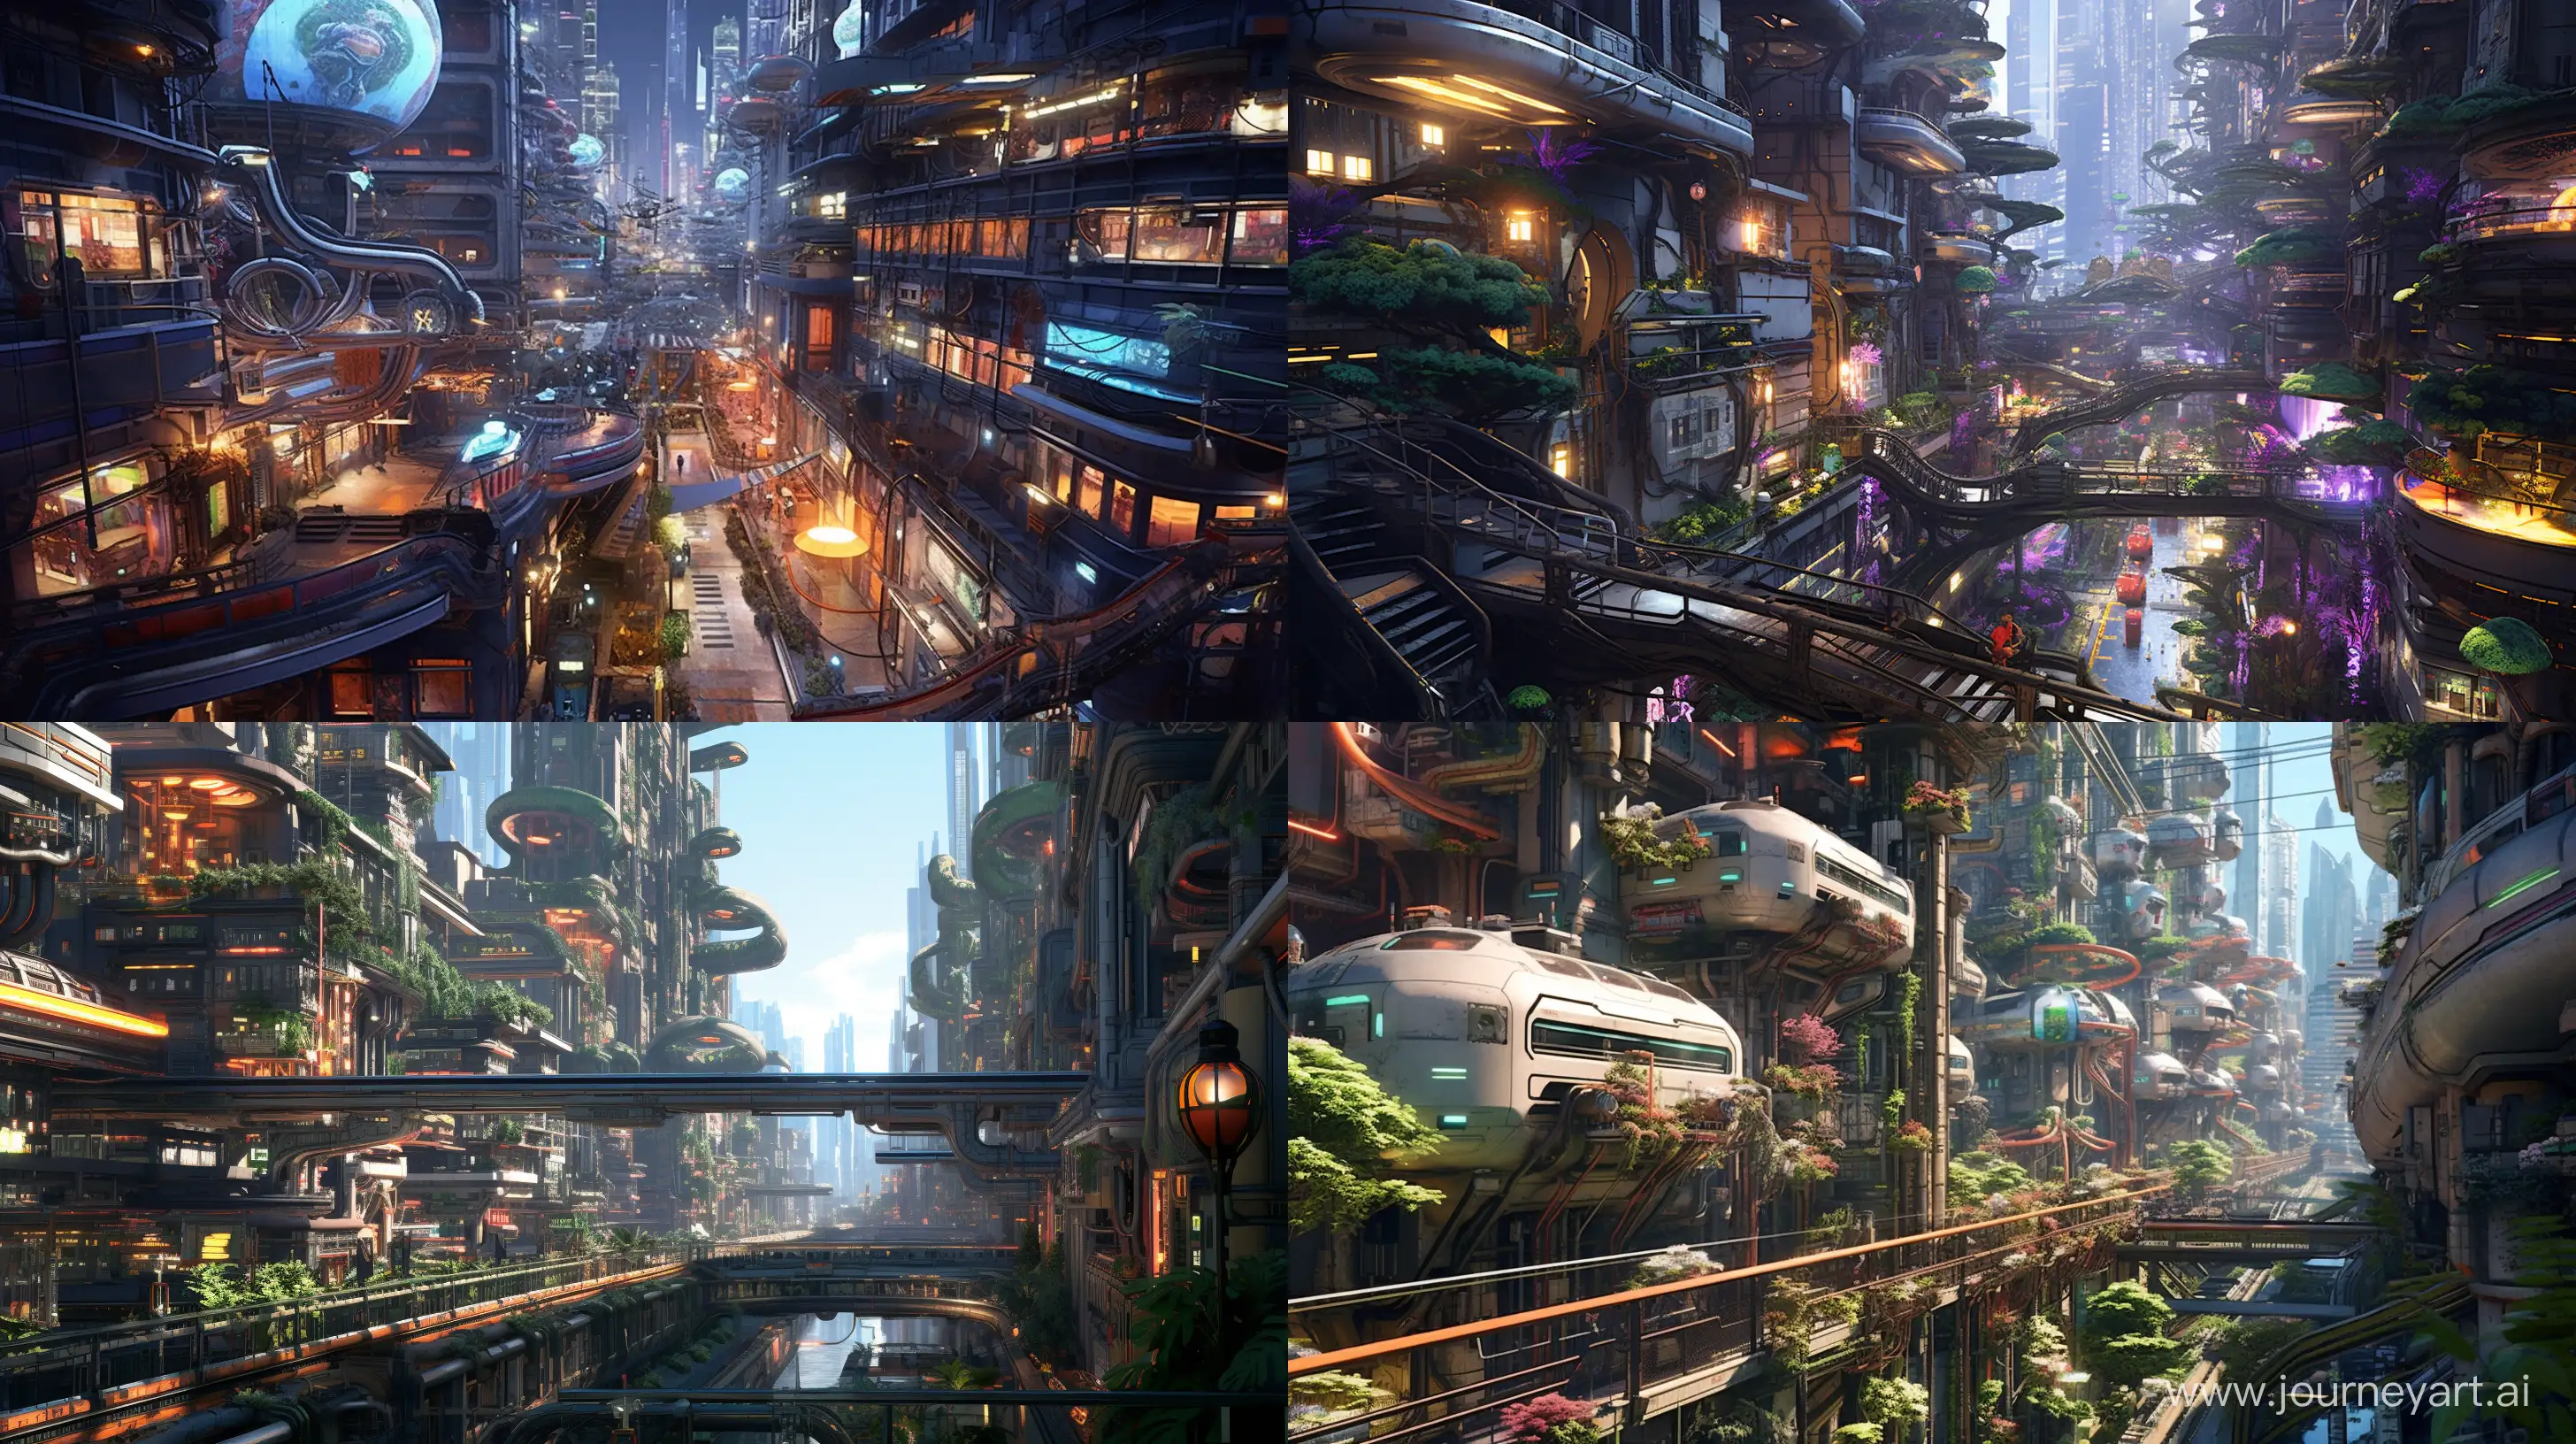 Futuristic-Cyberpunk-Megapolis-NeoBabylon-Skyline-with-HighDensity-Architecture-and-Pedestrian-Pathways